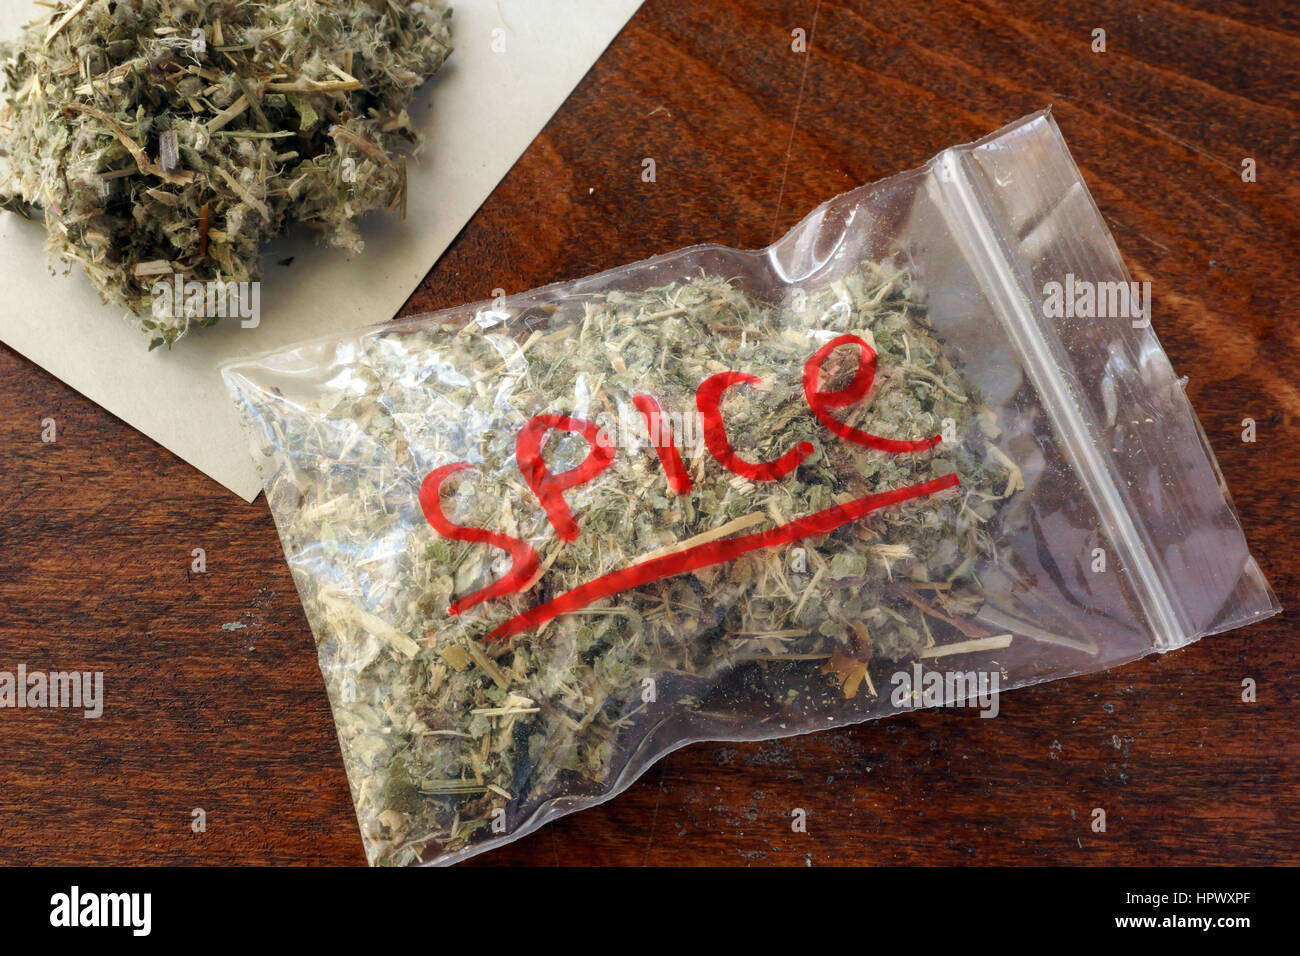 Plastic bag of marijuana hi-res stock photography and images - Alamy